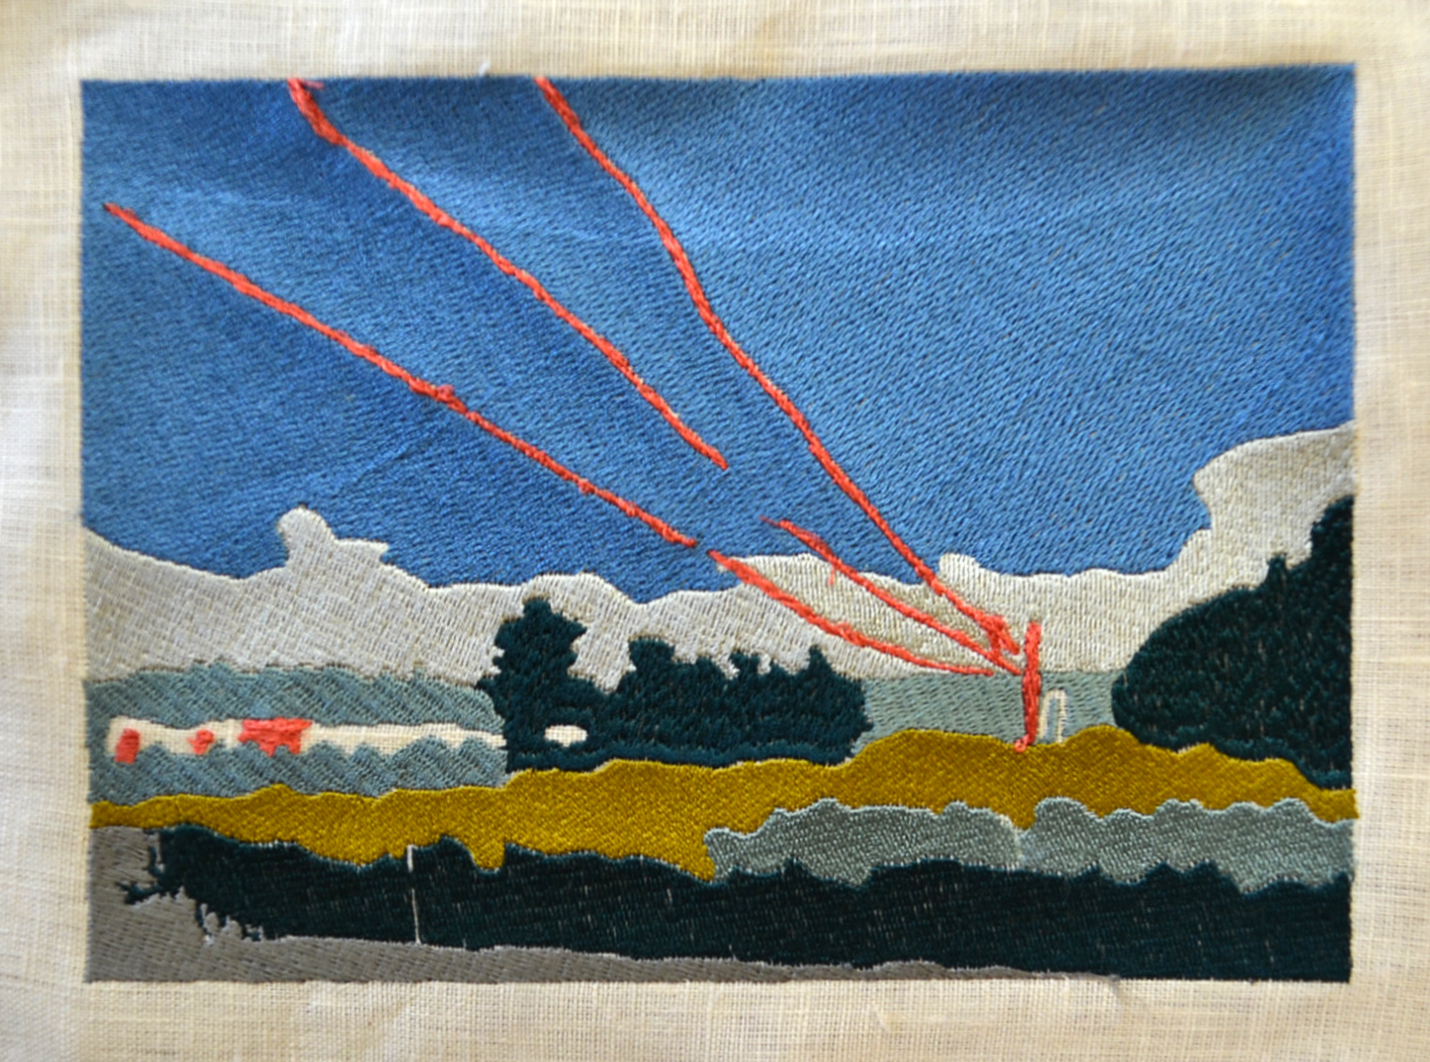 Embroidered Landscape No. 4